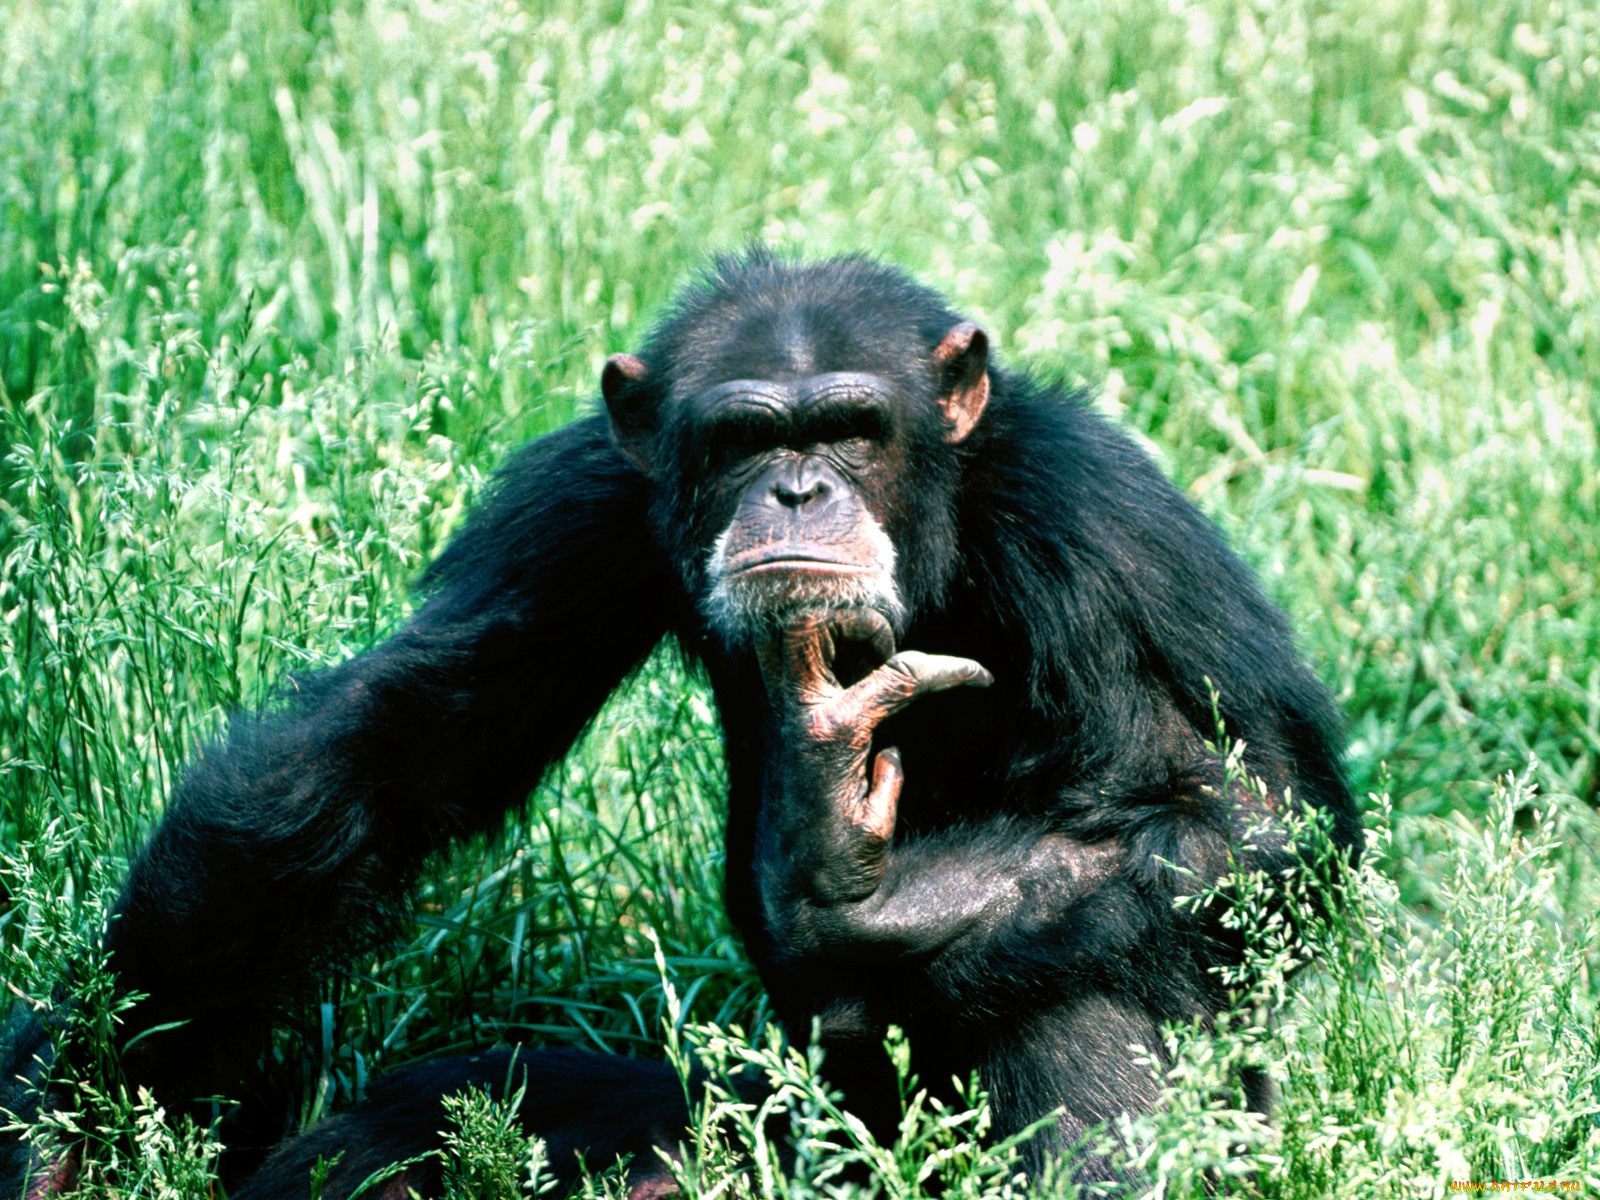 lost, in, thought, chimpanzee, животные, обезьяны